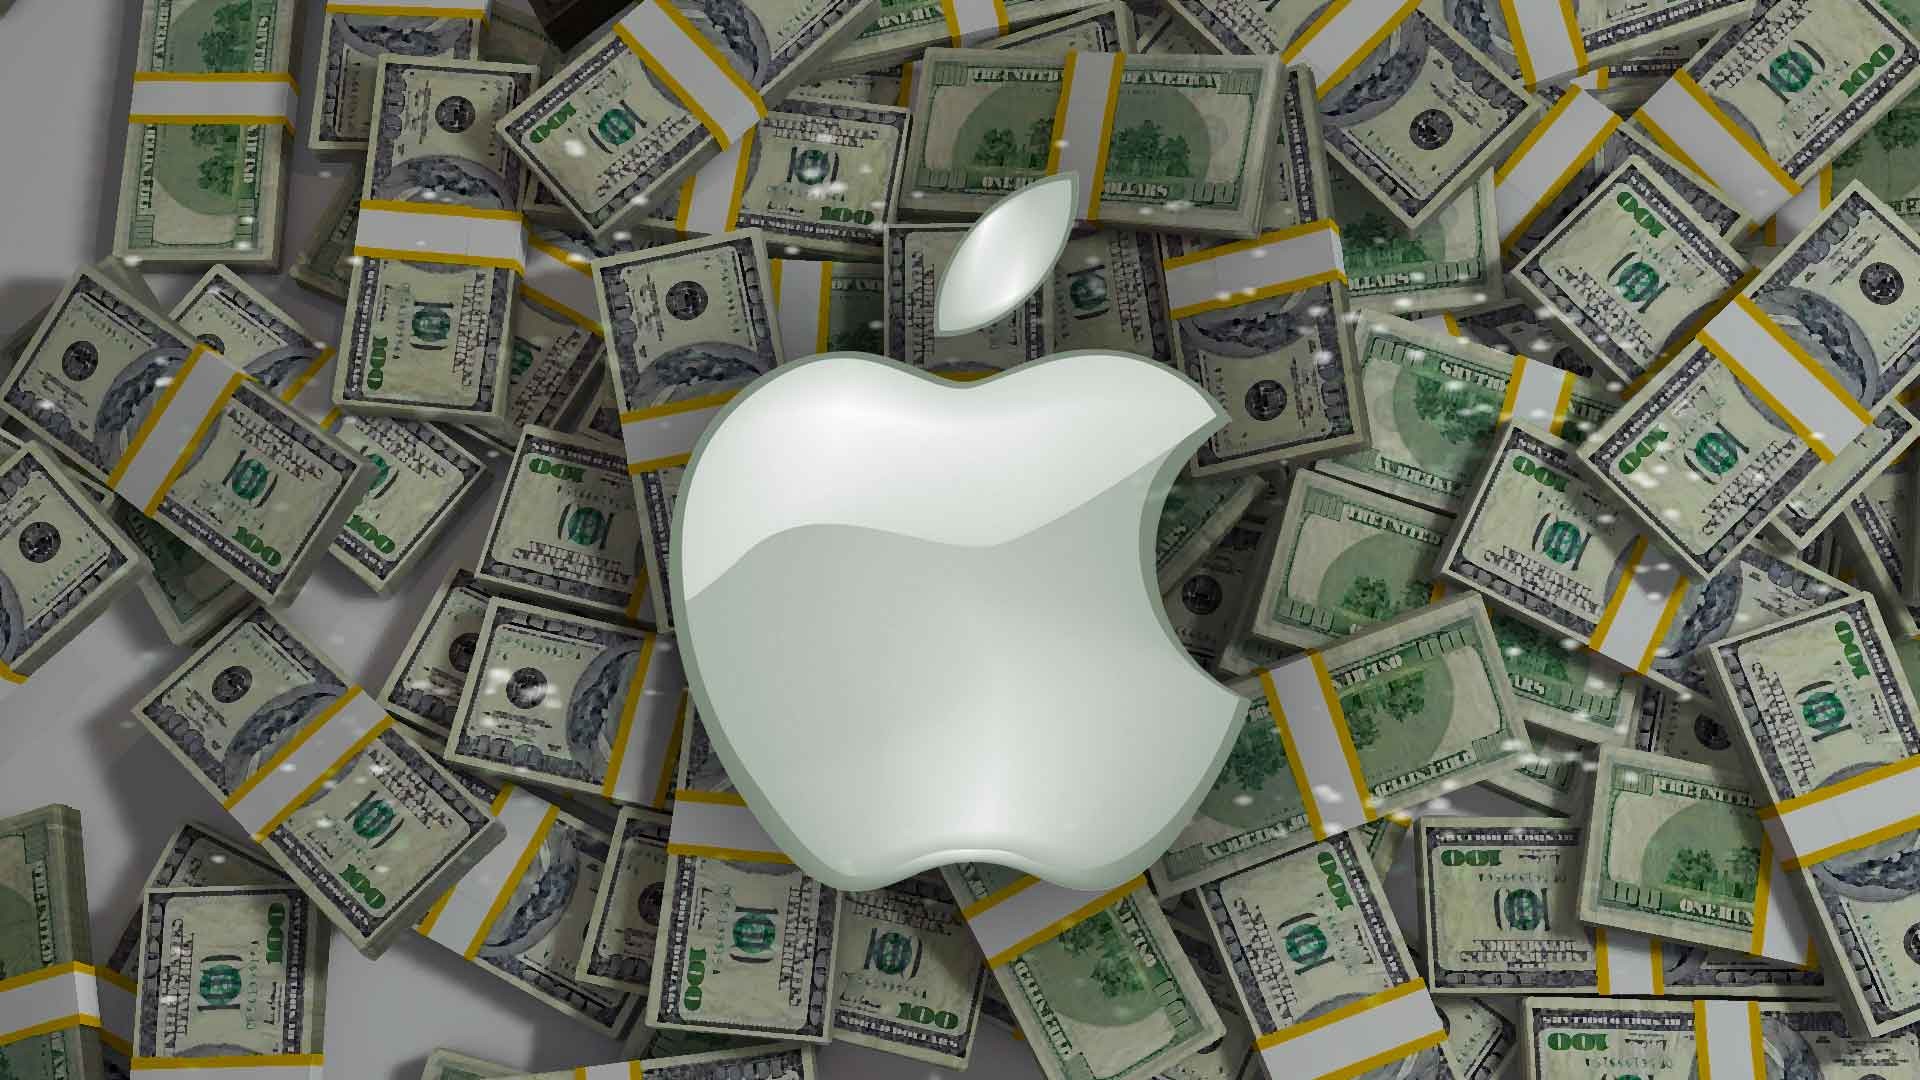 Aes sobem e valor de mercado da Apple bate novo recorde ao ultrapassar US$ 2,8 trilhes